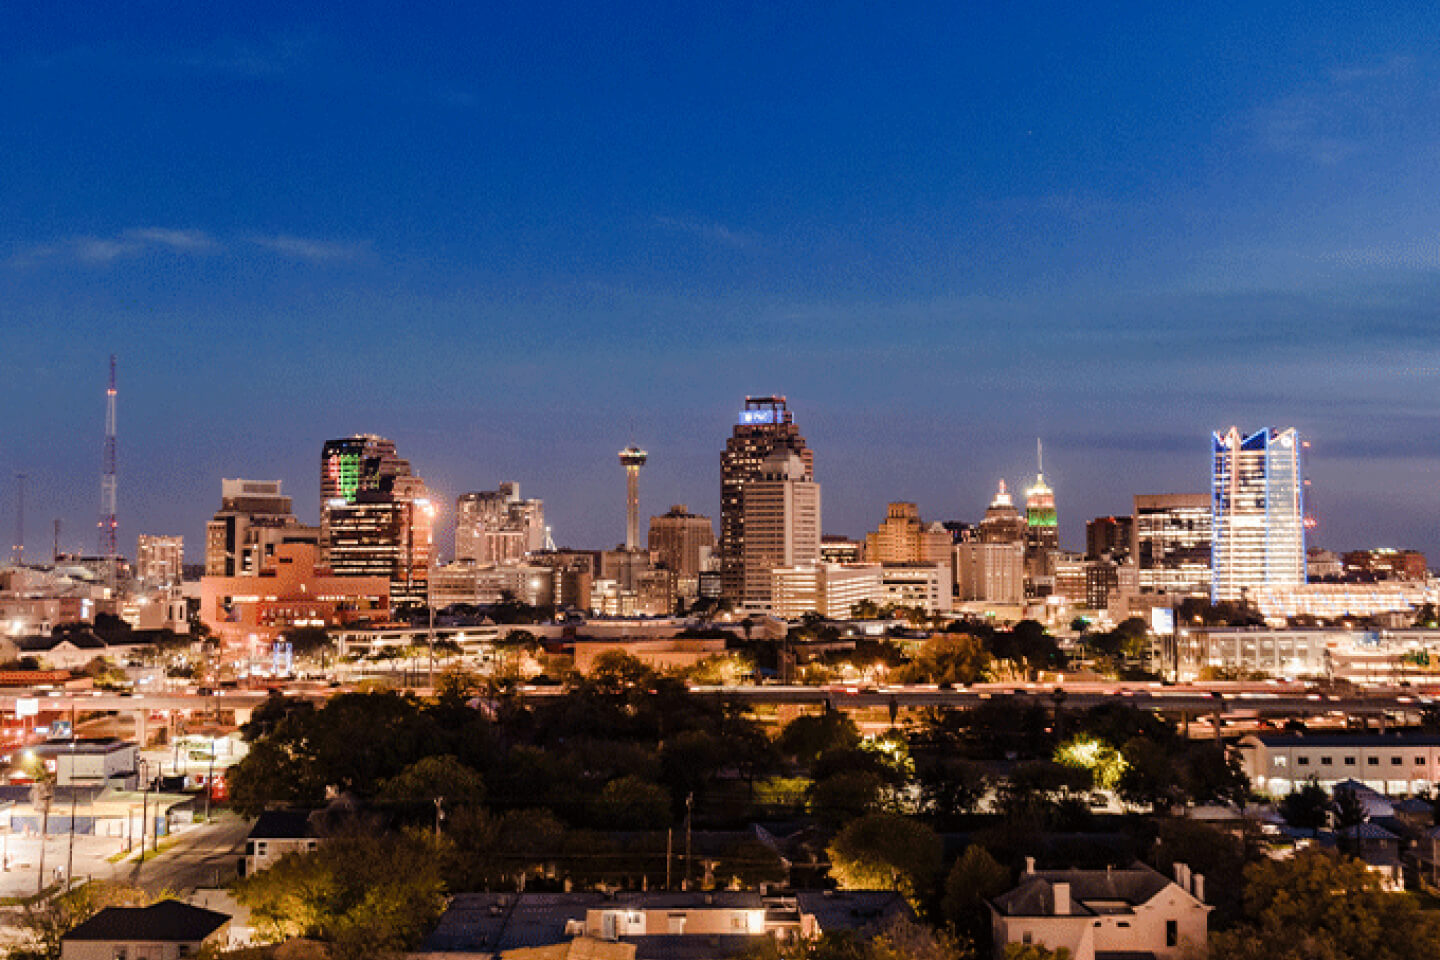 Night time cityscape of Downtown San Antonio